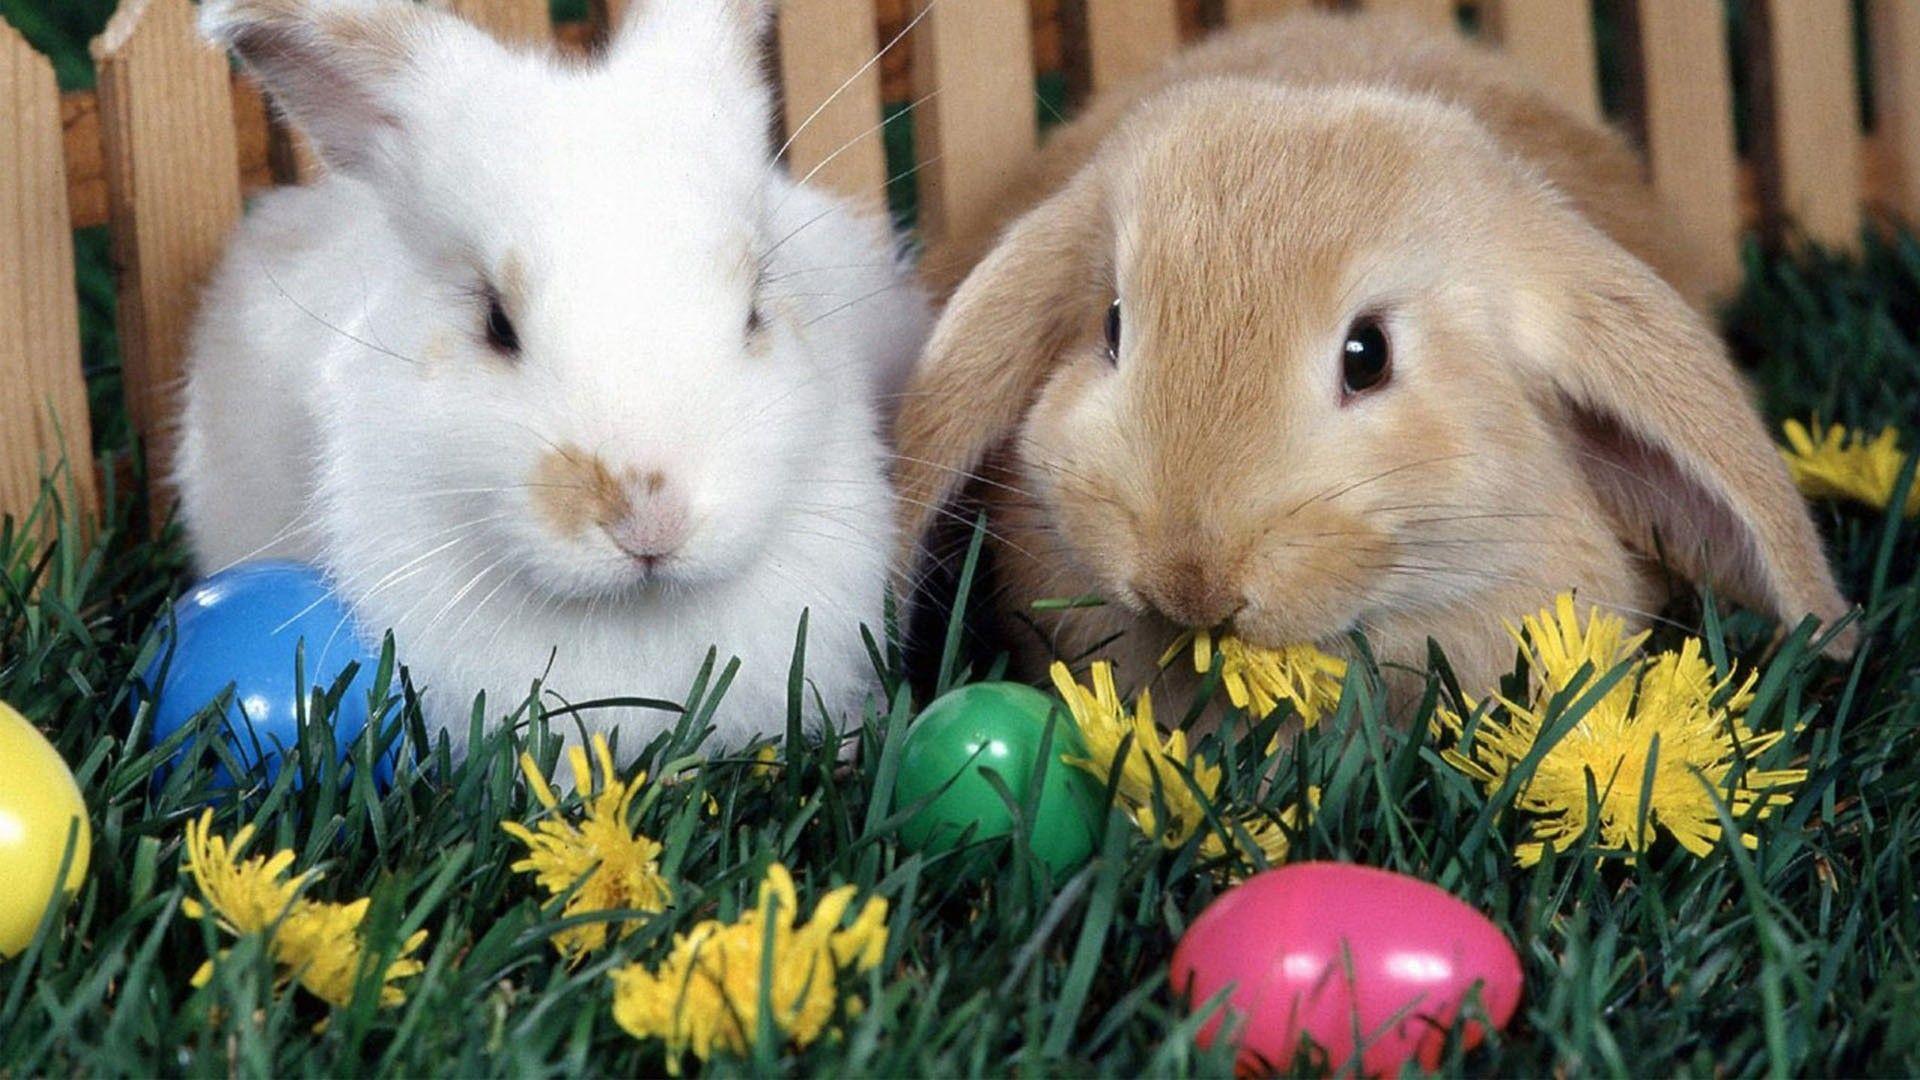 Easter Bunny HD Wallpaper